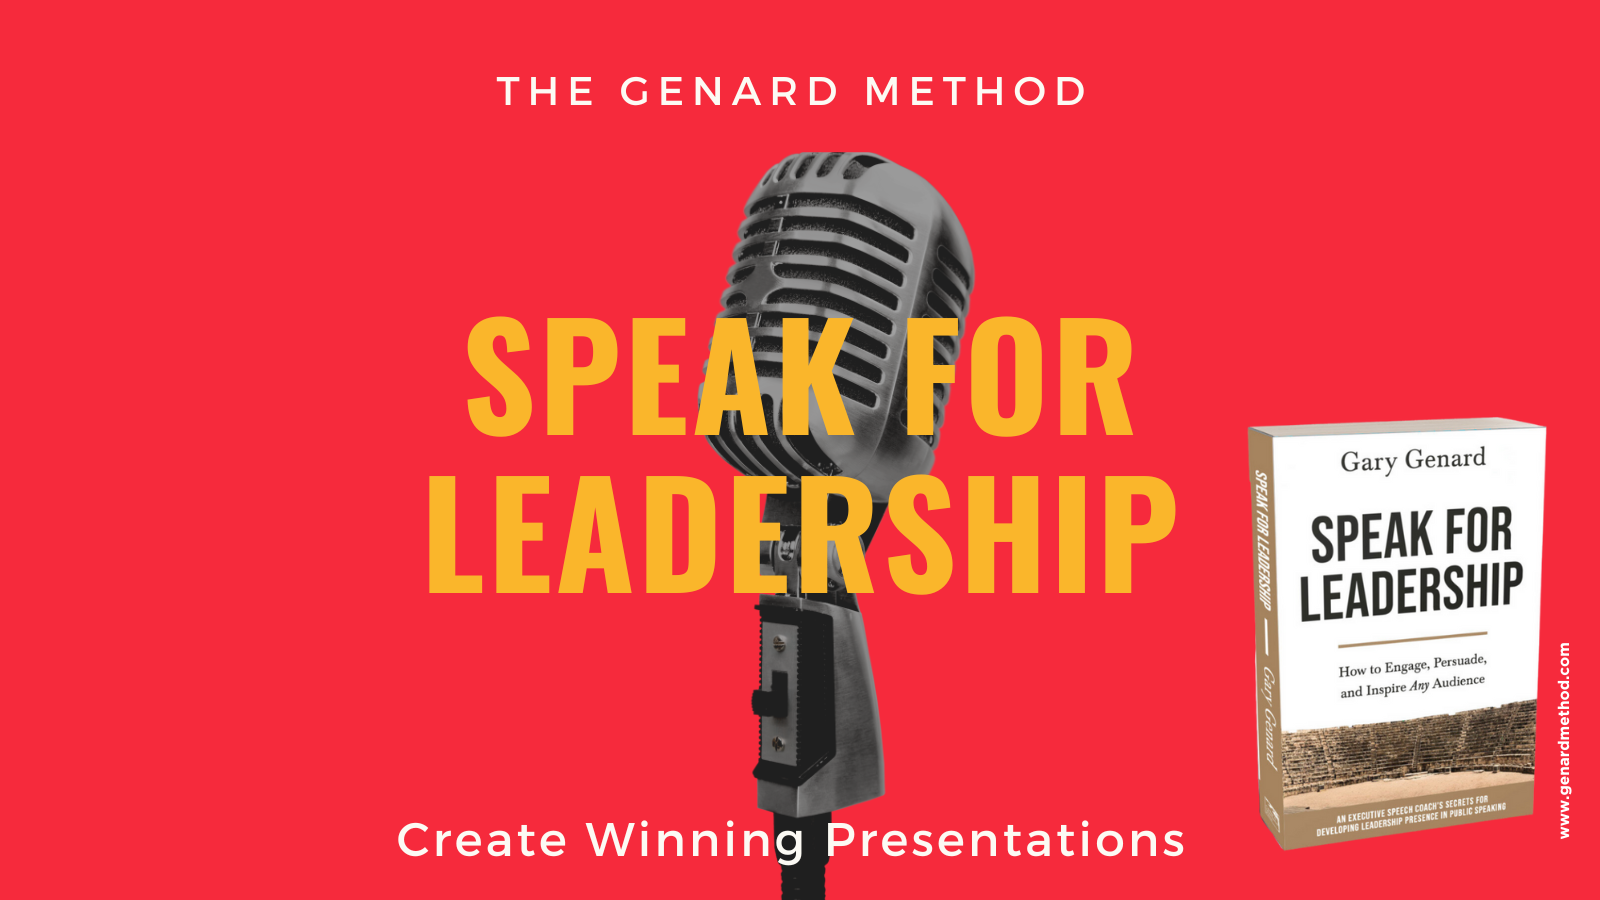 Create Winning Presentations with Dr. Gary Genard's book on leadership presence, Speak for Leadership